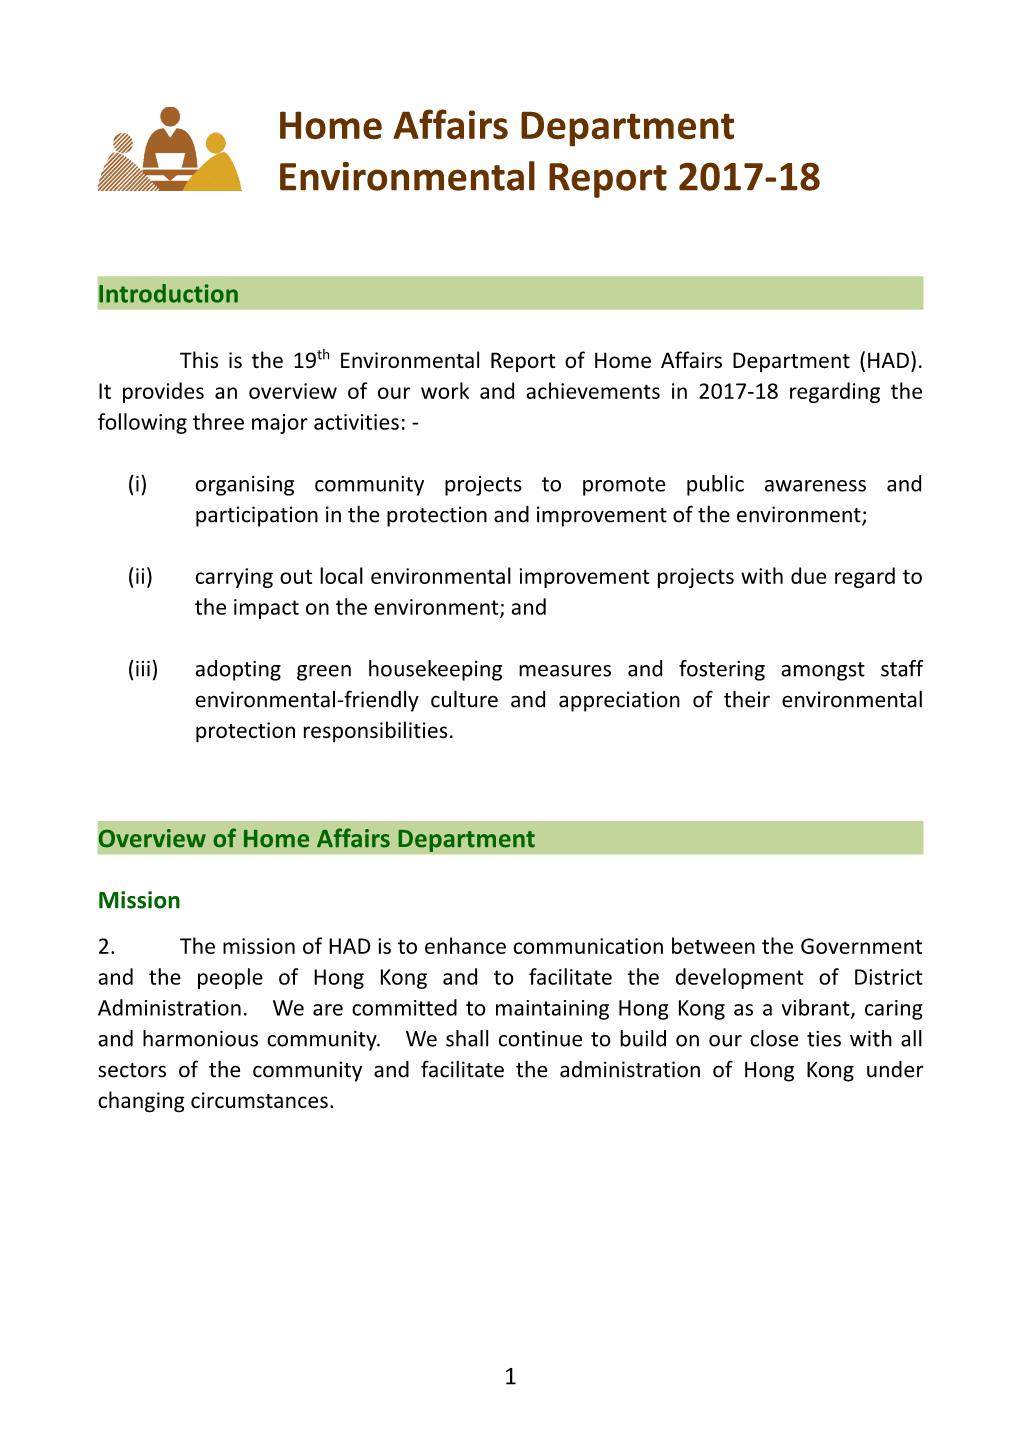 Home Affairs Department Environmental Report 2017-18